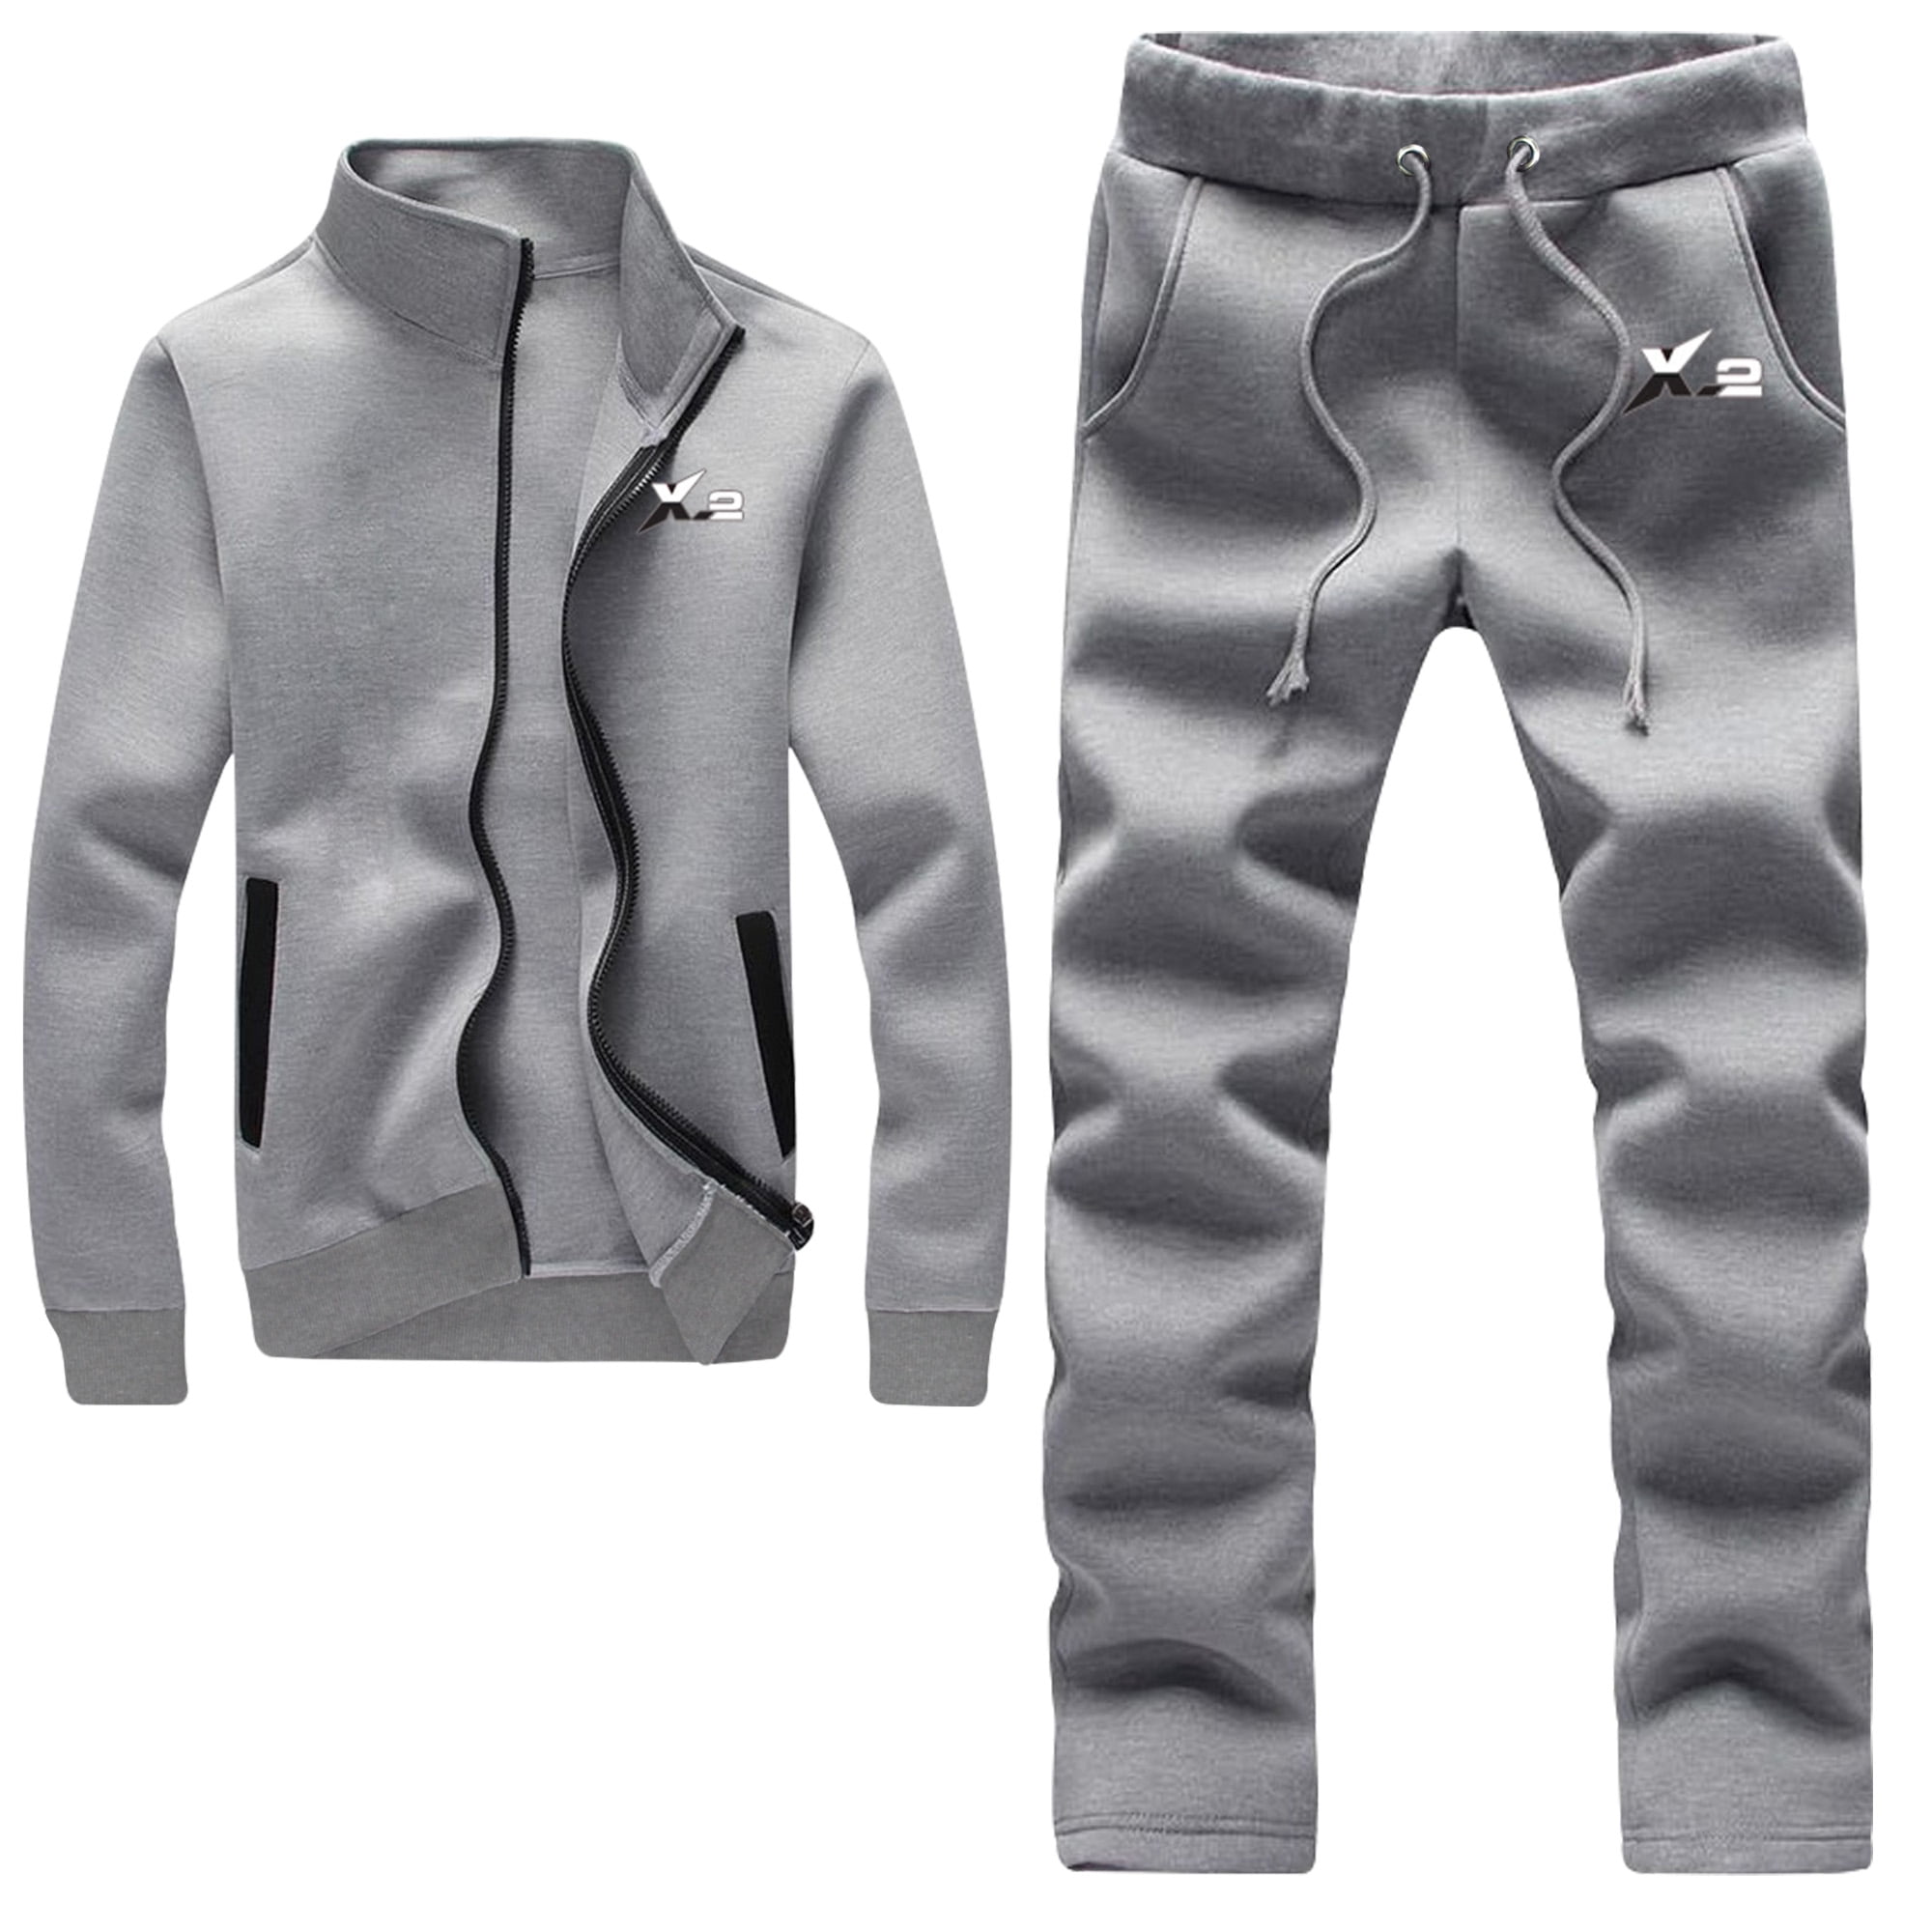 Athletic Full Zip Fleece Tracksuit Jogging Sweatsuit Activewear Gray Small